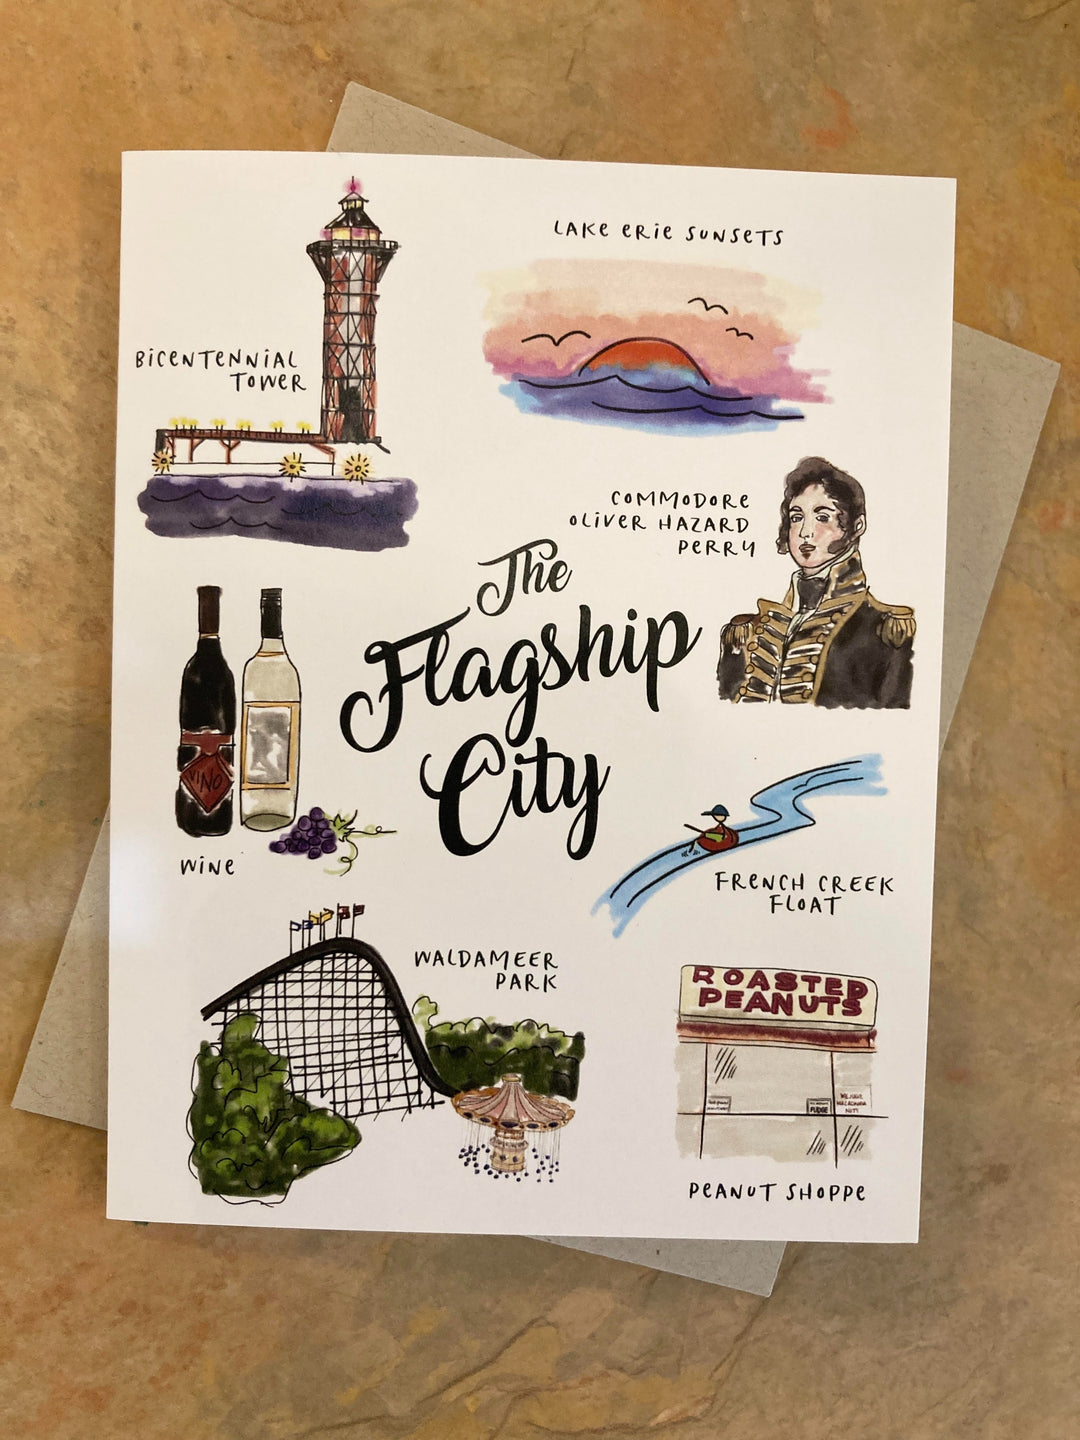 Card The Flagship City